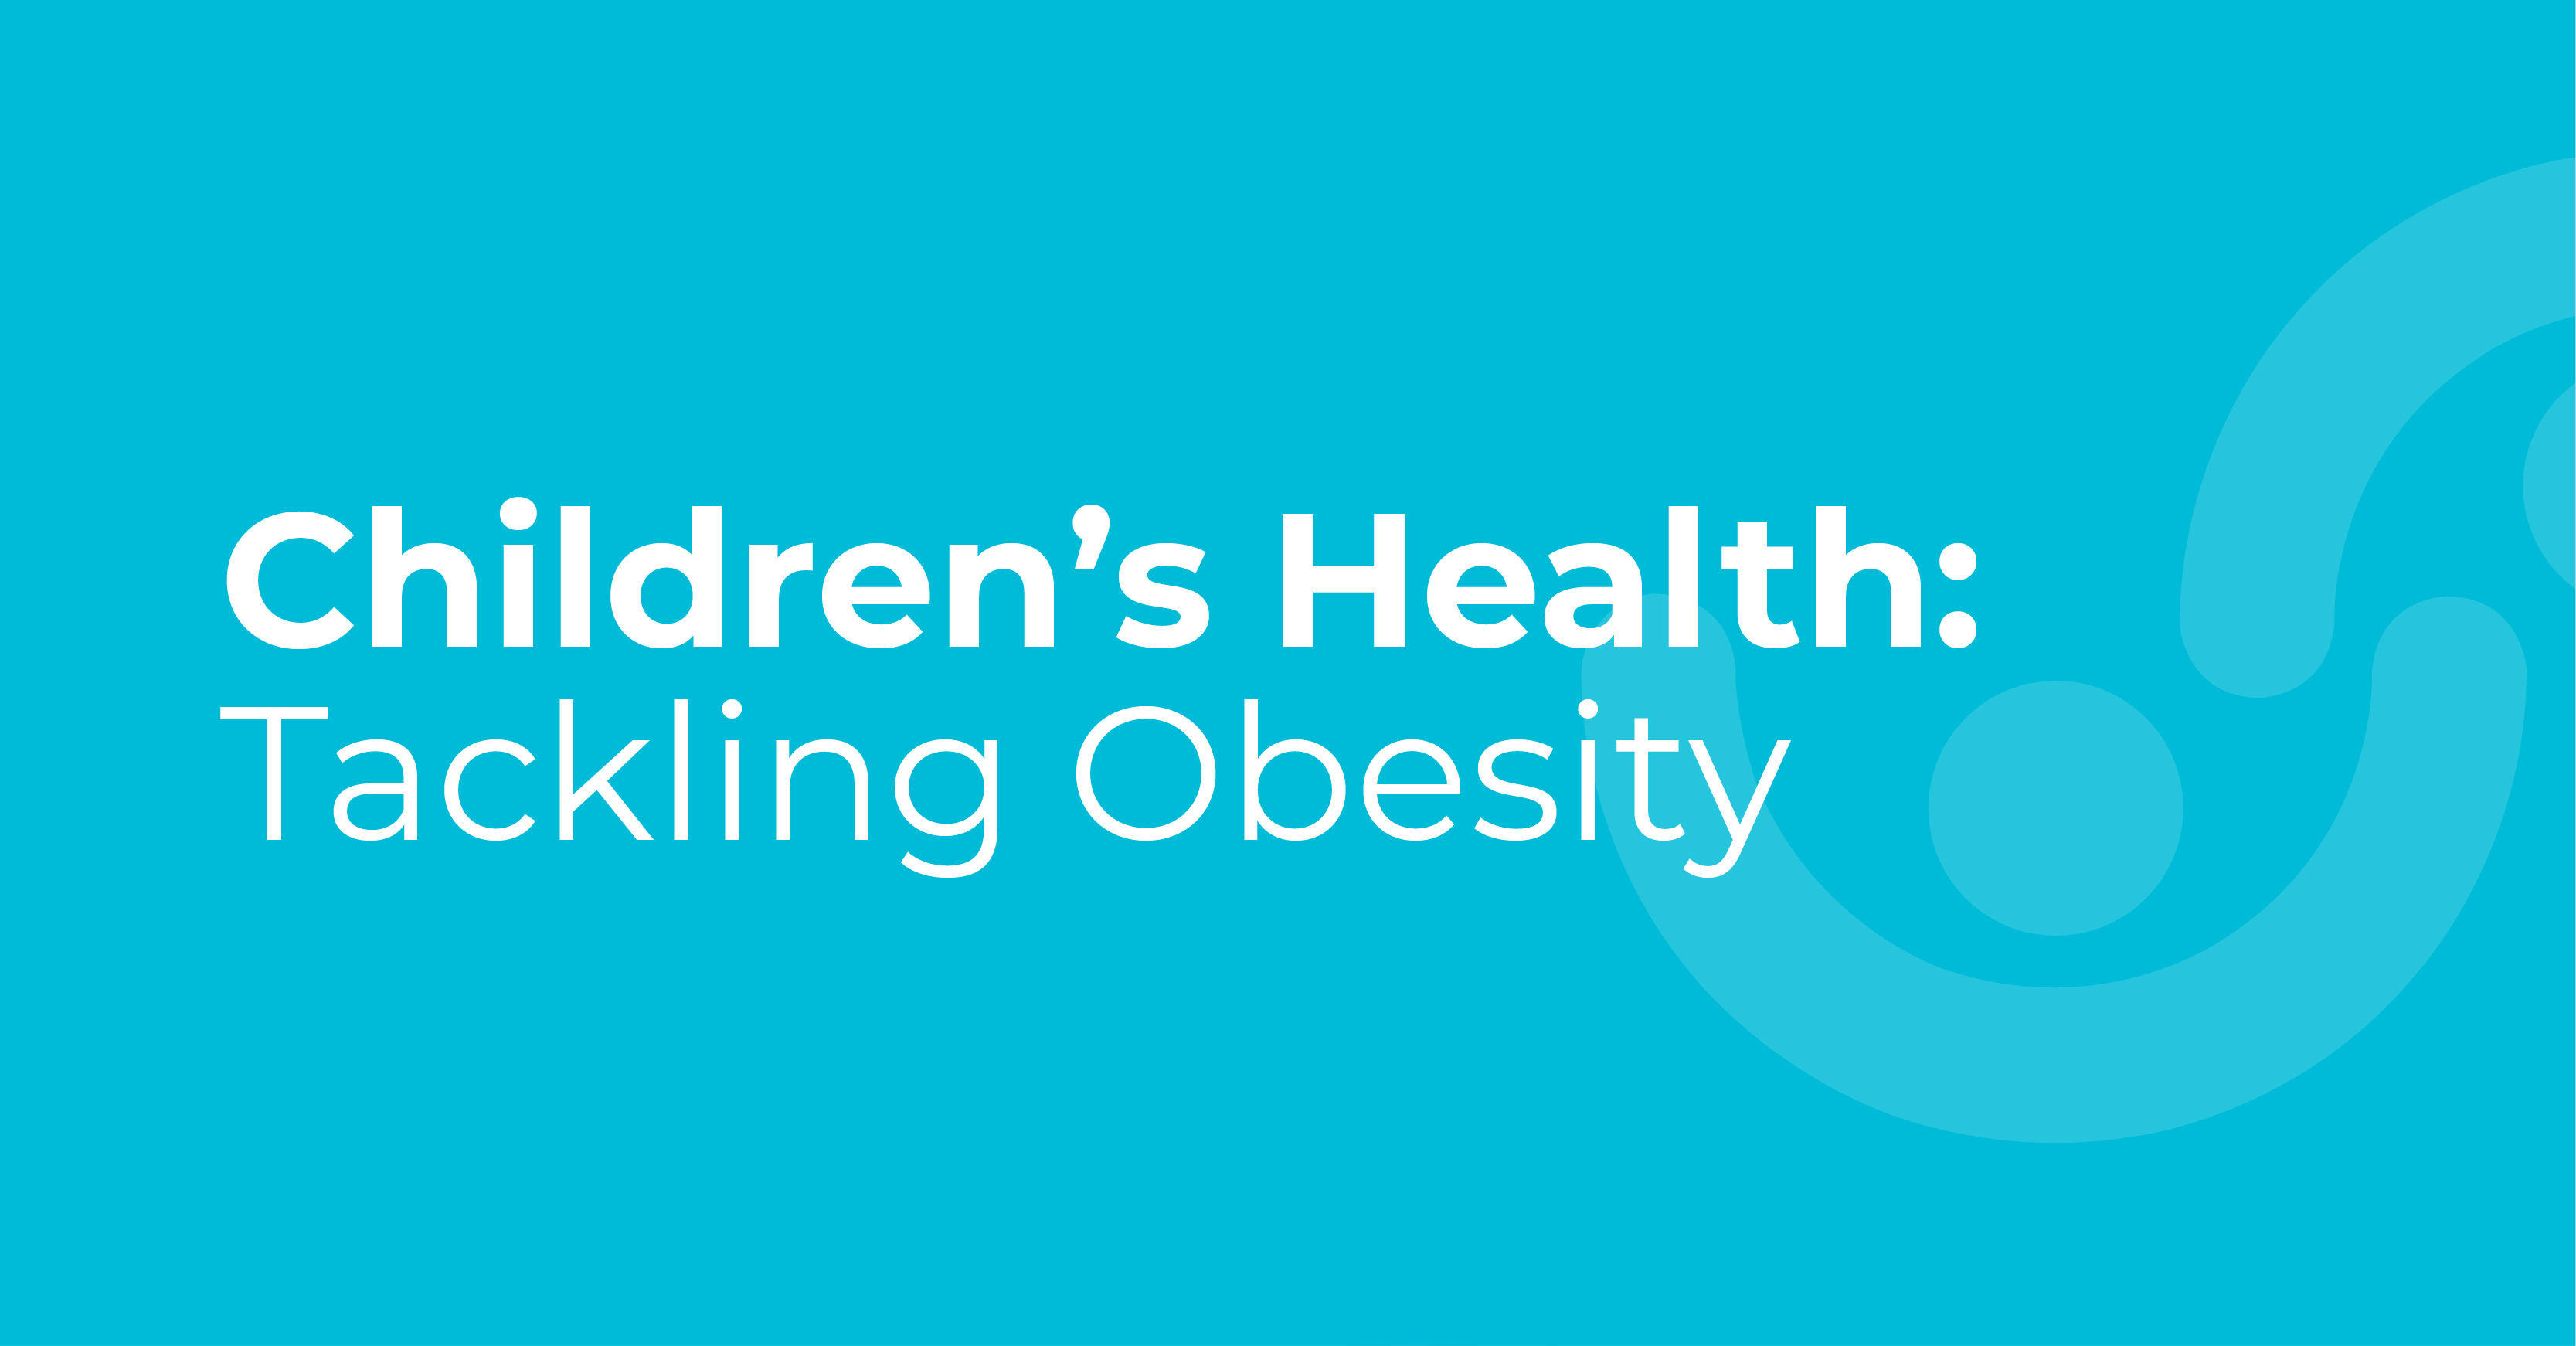 Children’s Health: Tackling Obesity